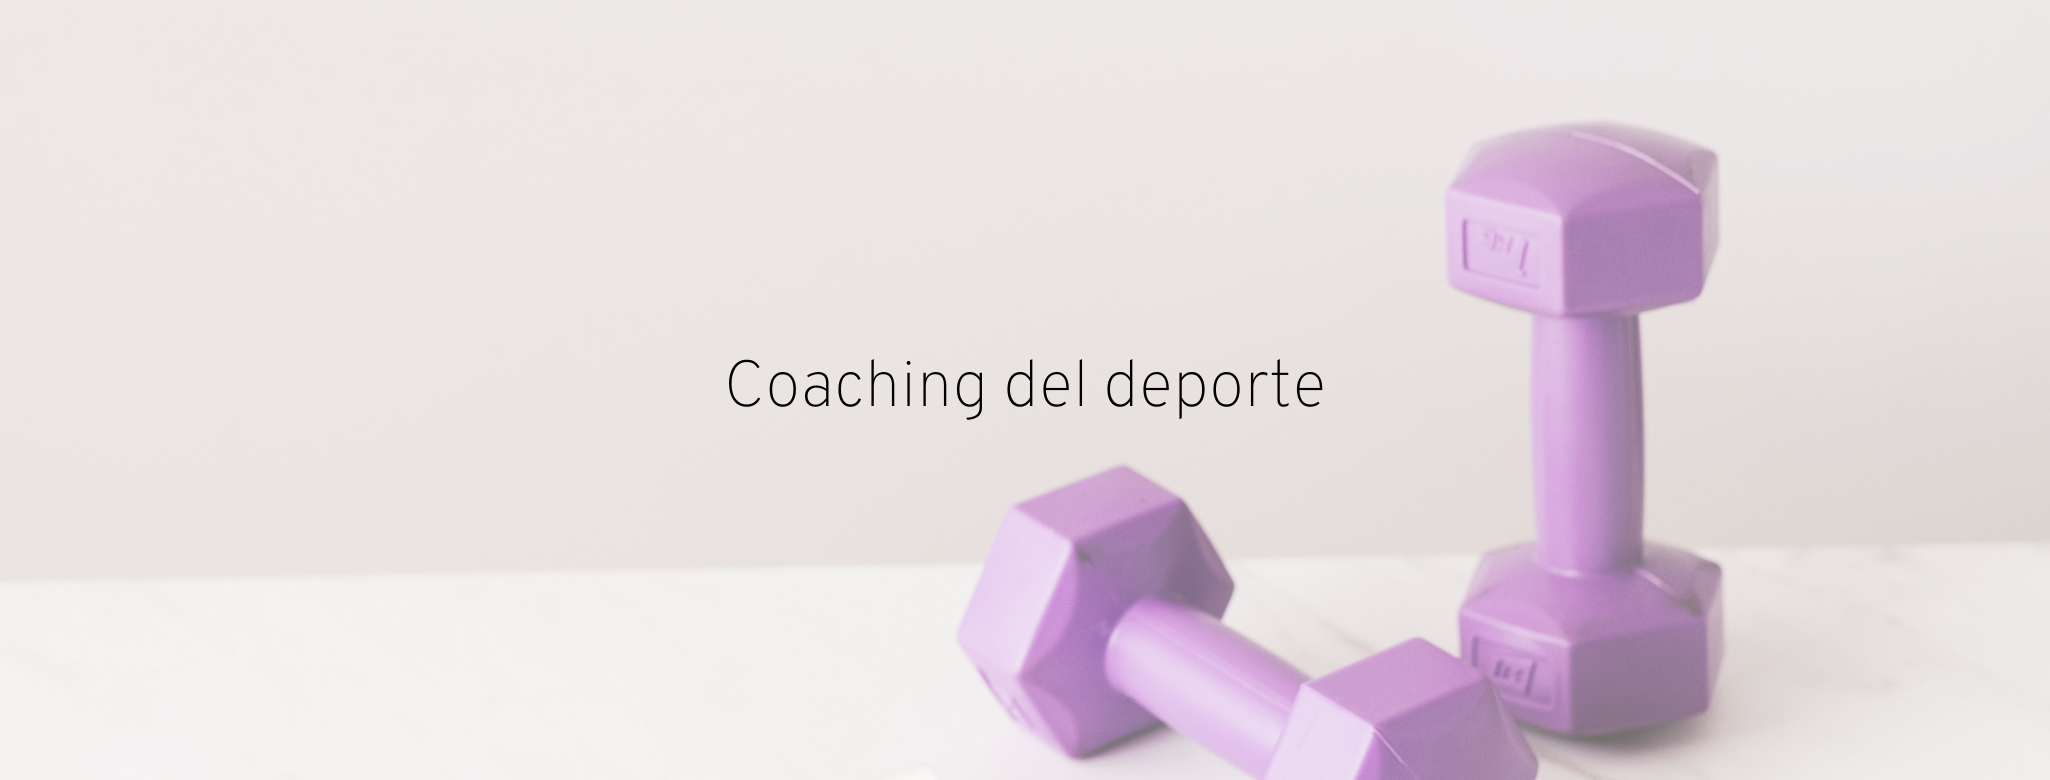 coaching del deporte